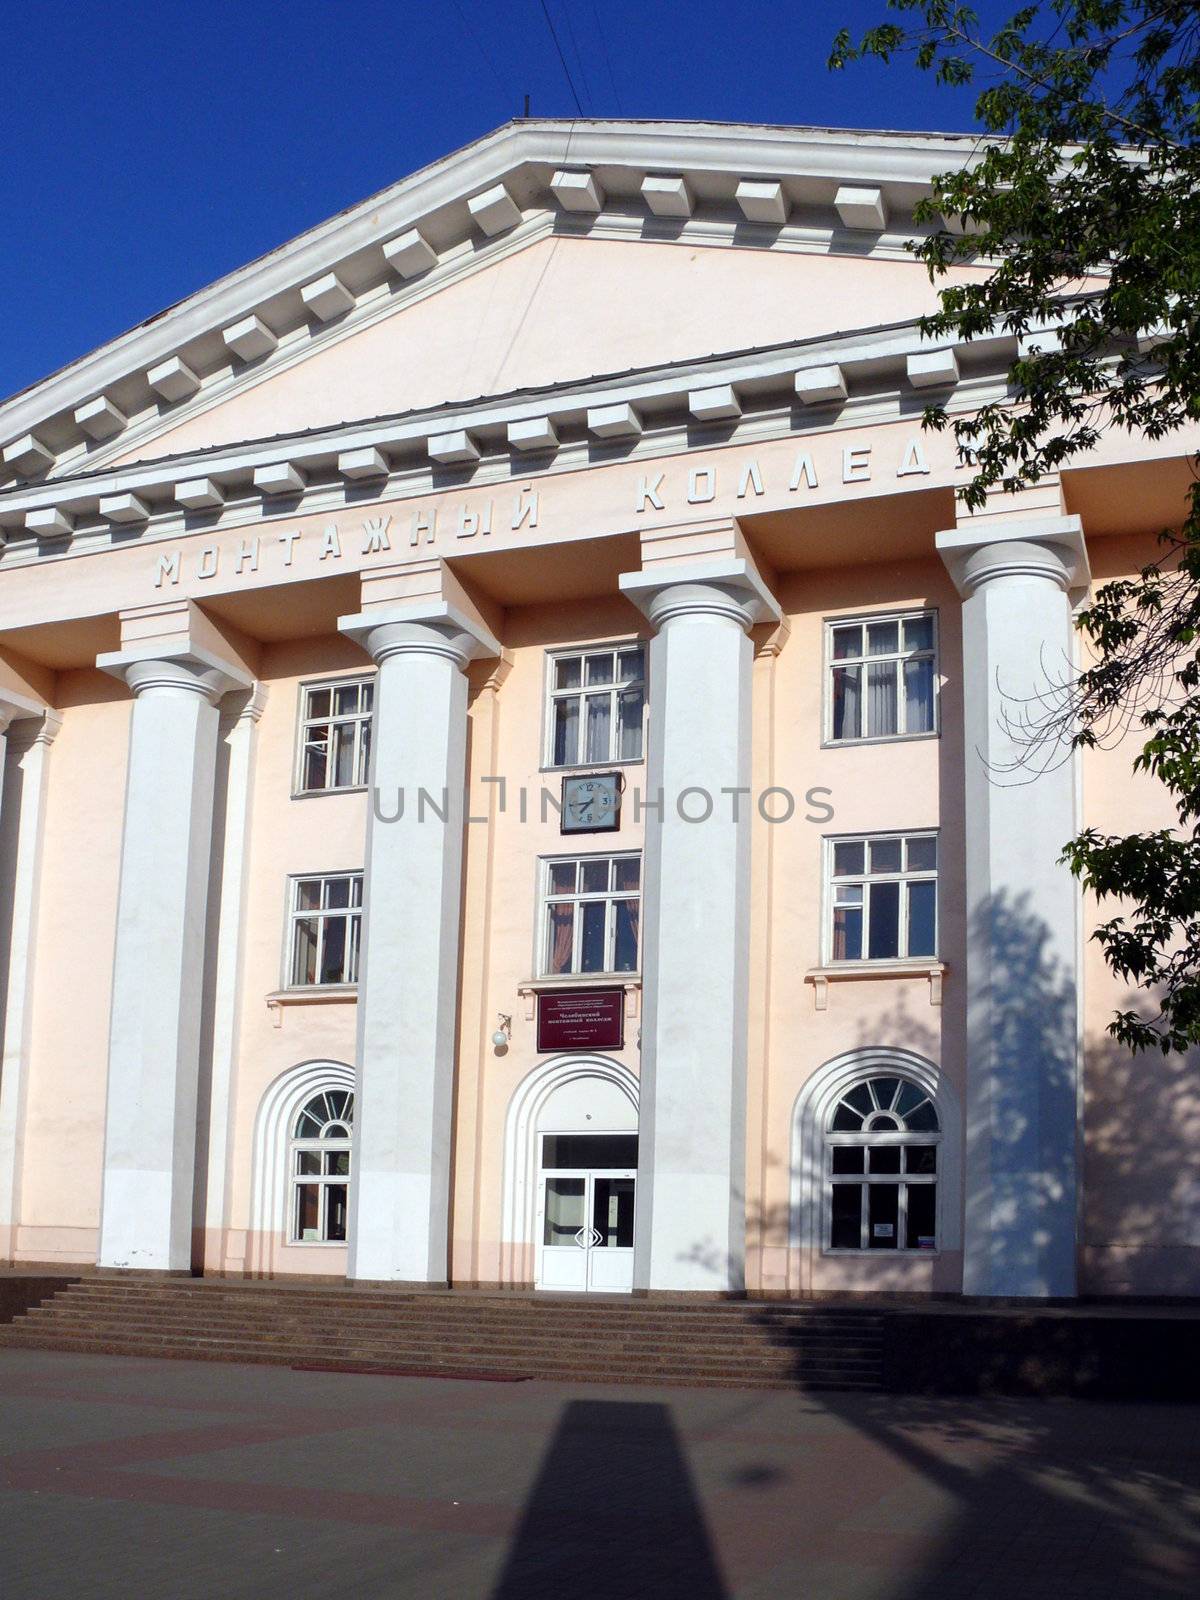 college of assembly - Chelyabinsk by Stoyanov